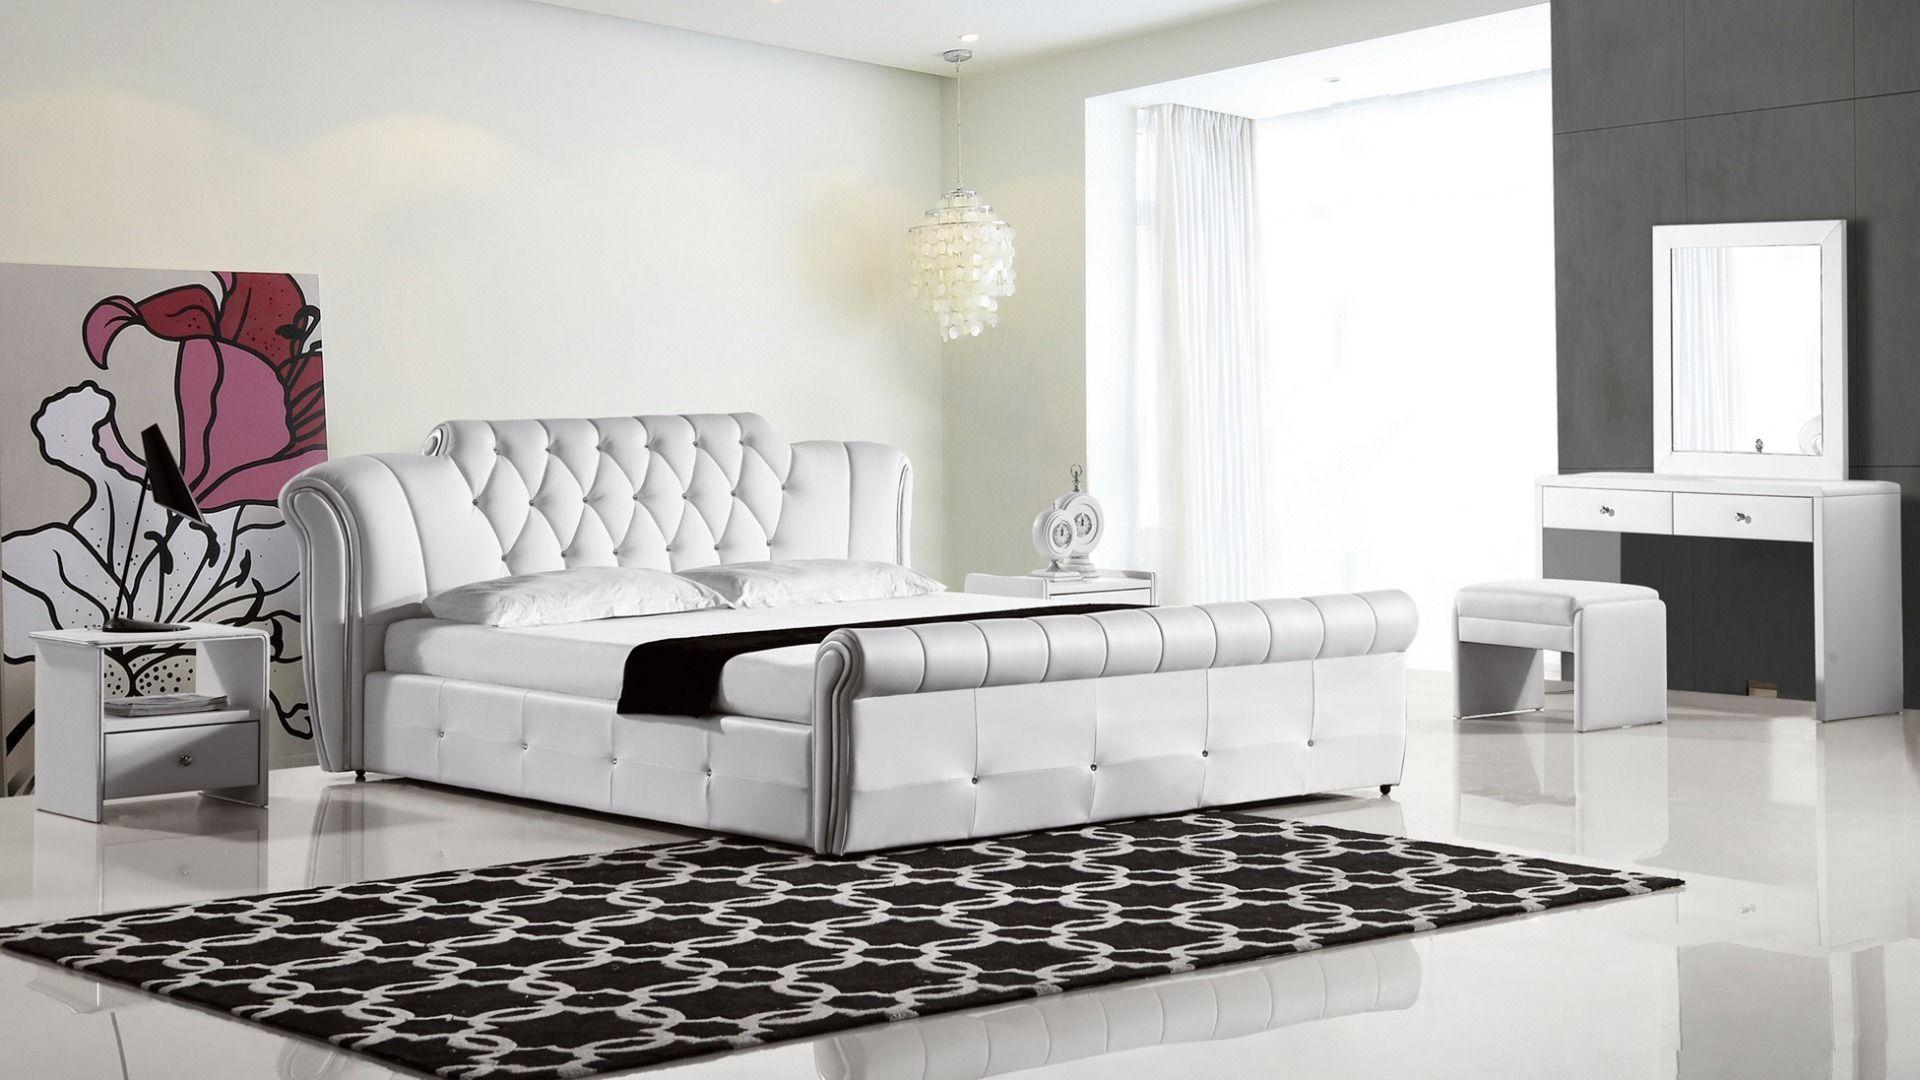 

    
American Eagle Furniture B-D032-W-CK Platform Bed White B-D032-W-CK
